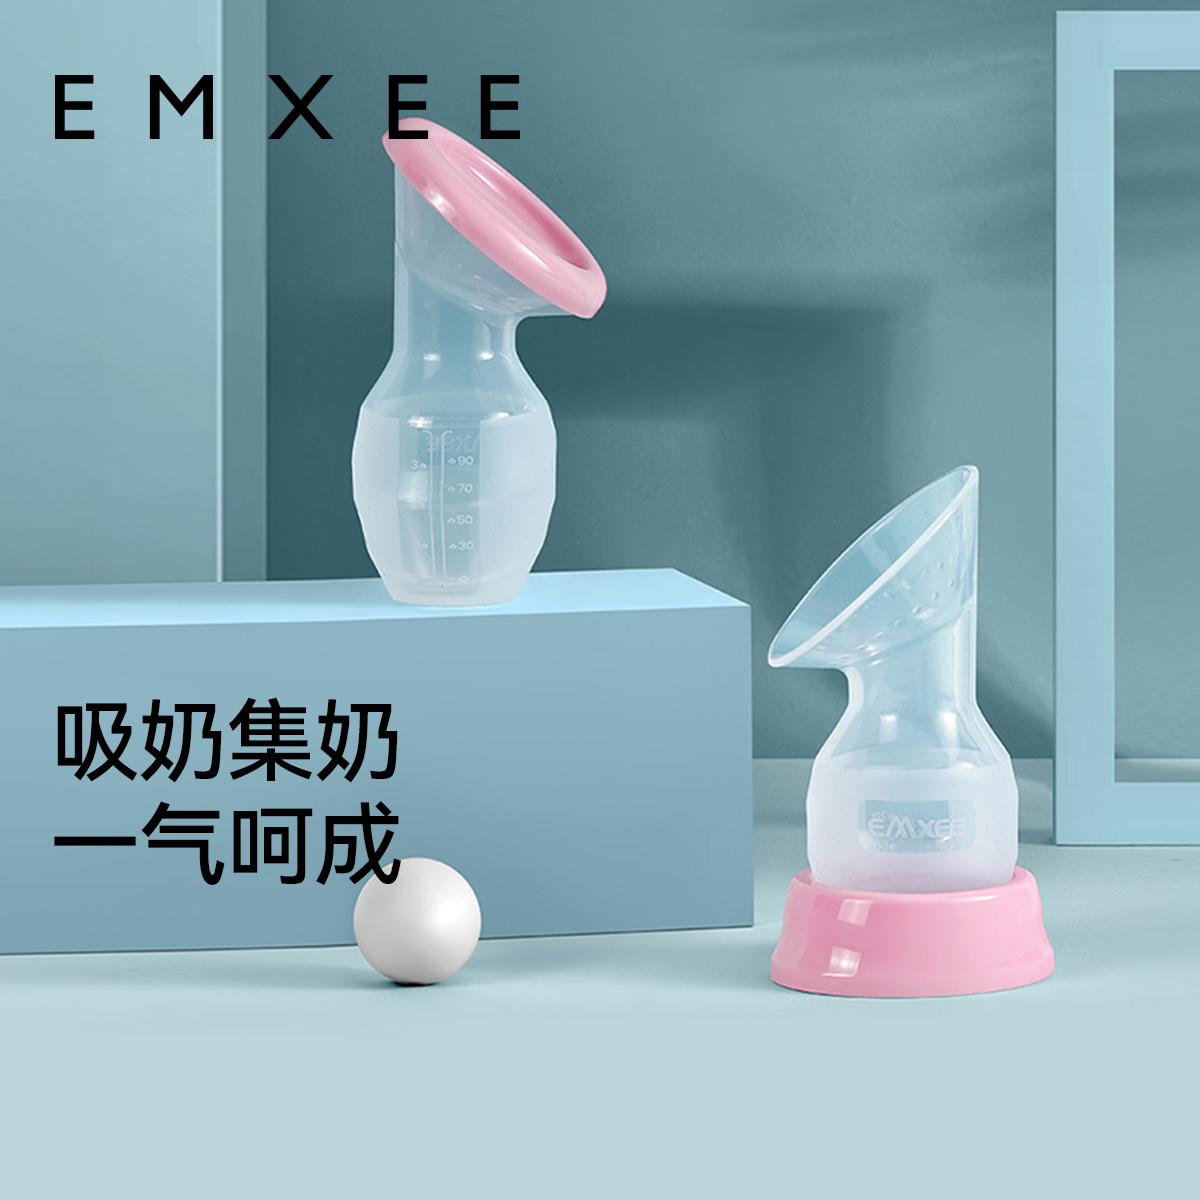 EMXEE 嫚熙 MX-6017 单边手动吸奶器